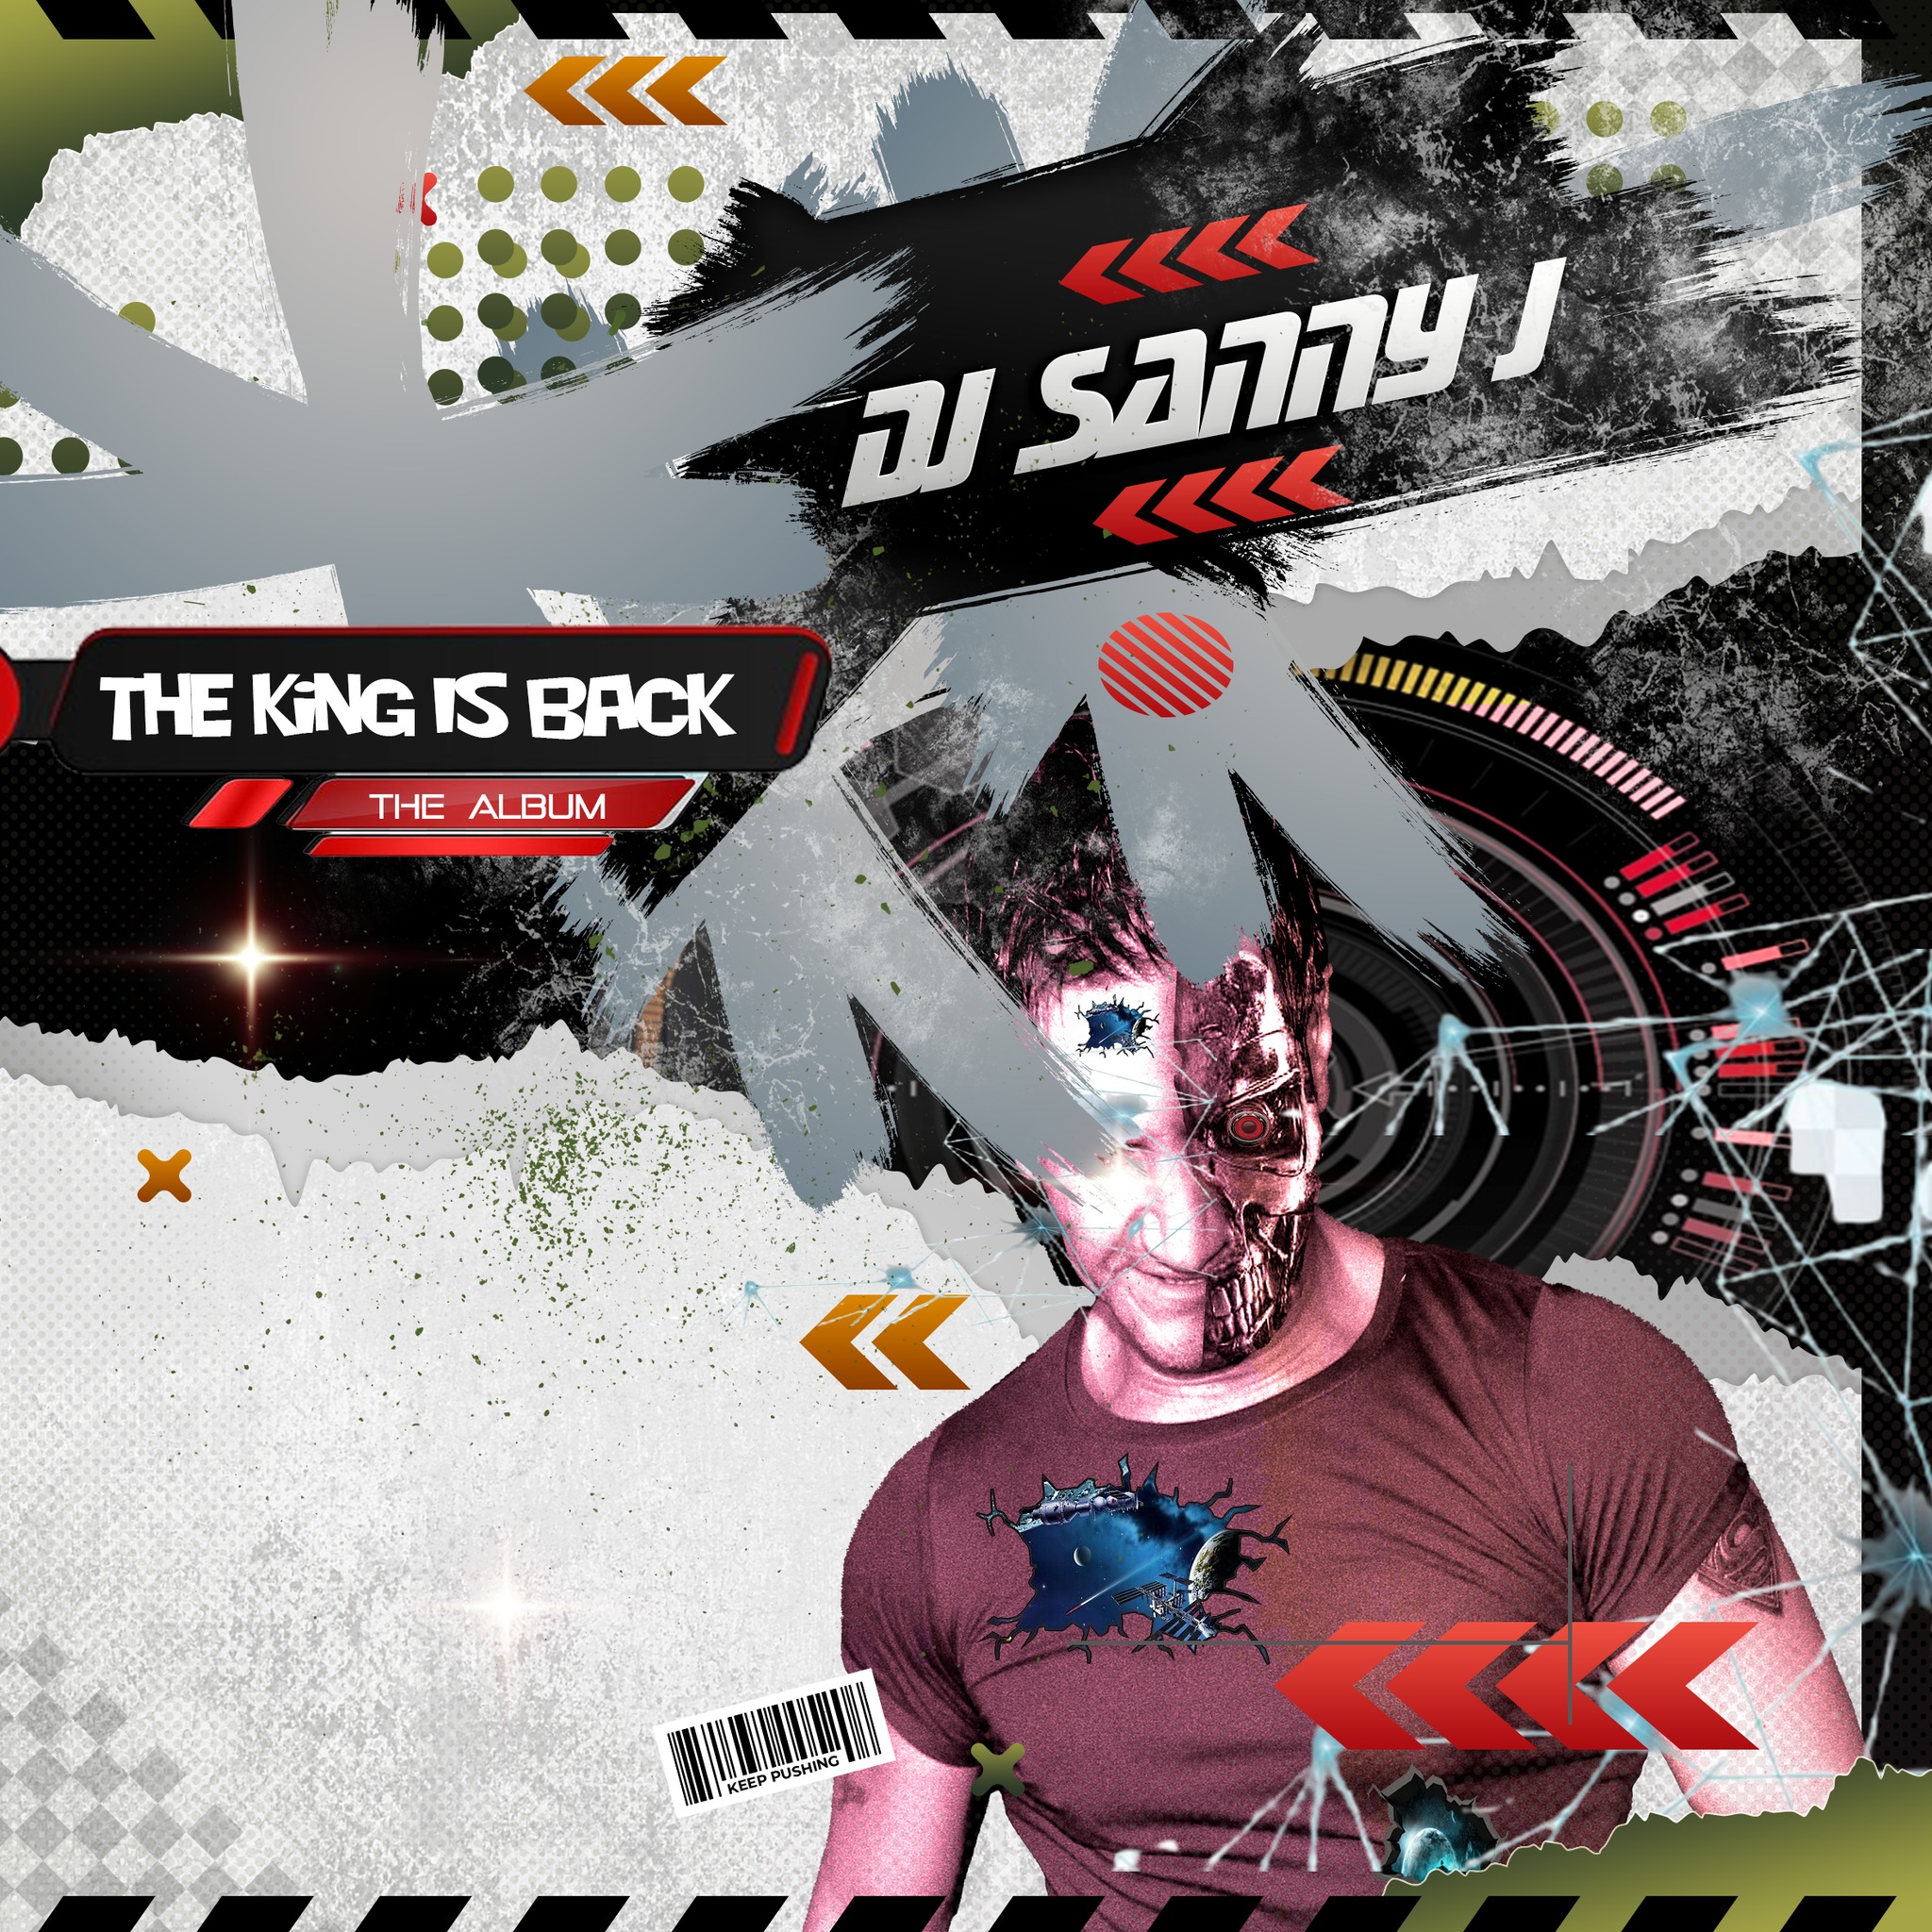 DJ Sanny J - The King Is Back Vol.1 (Album mit neuen Songs)